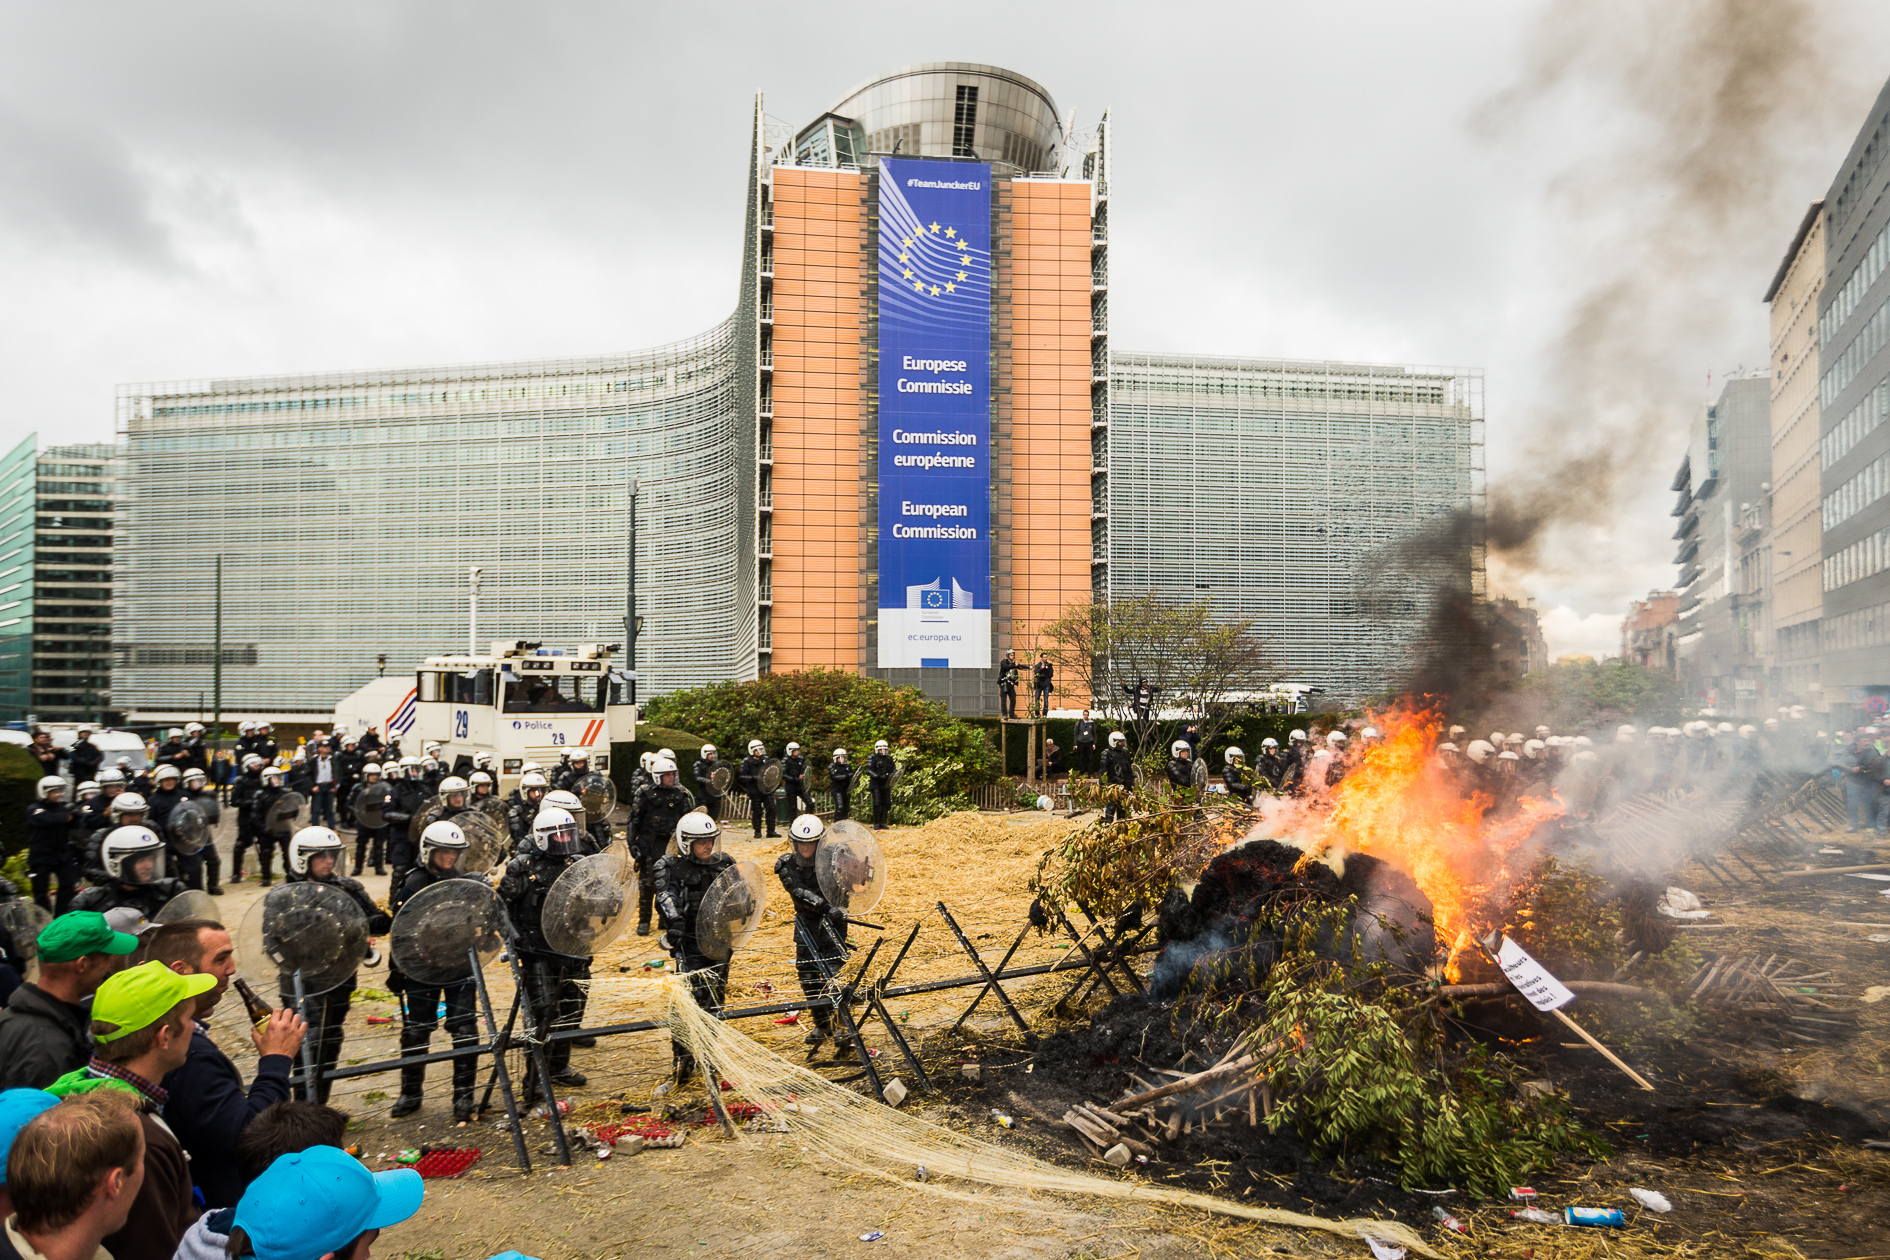 Boerenbetoging Brussel